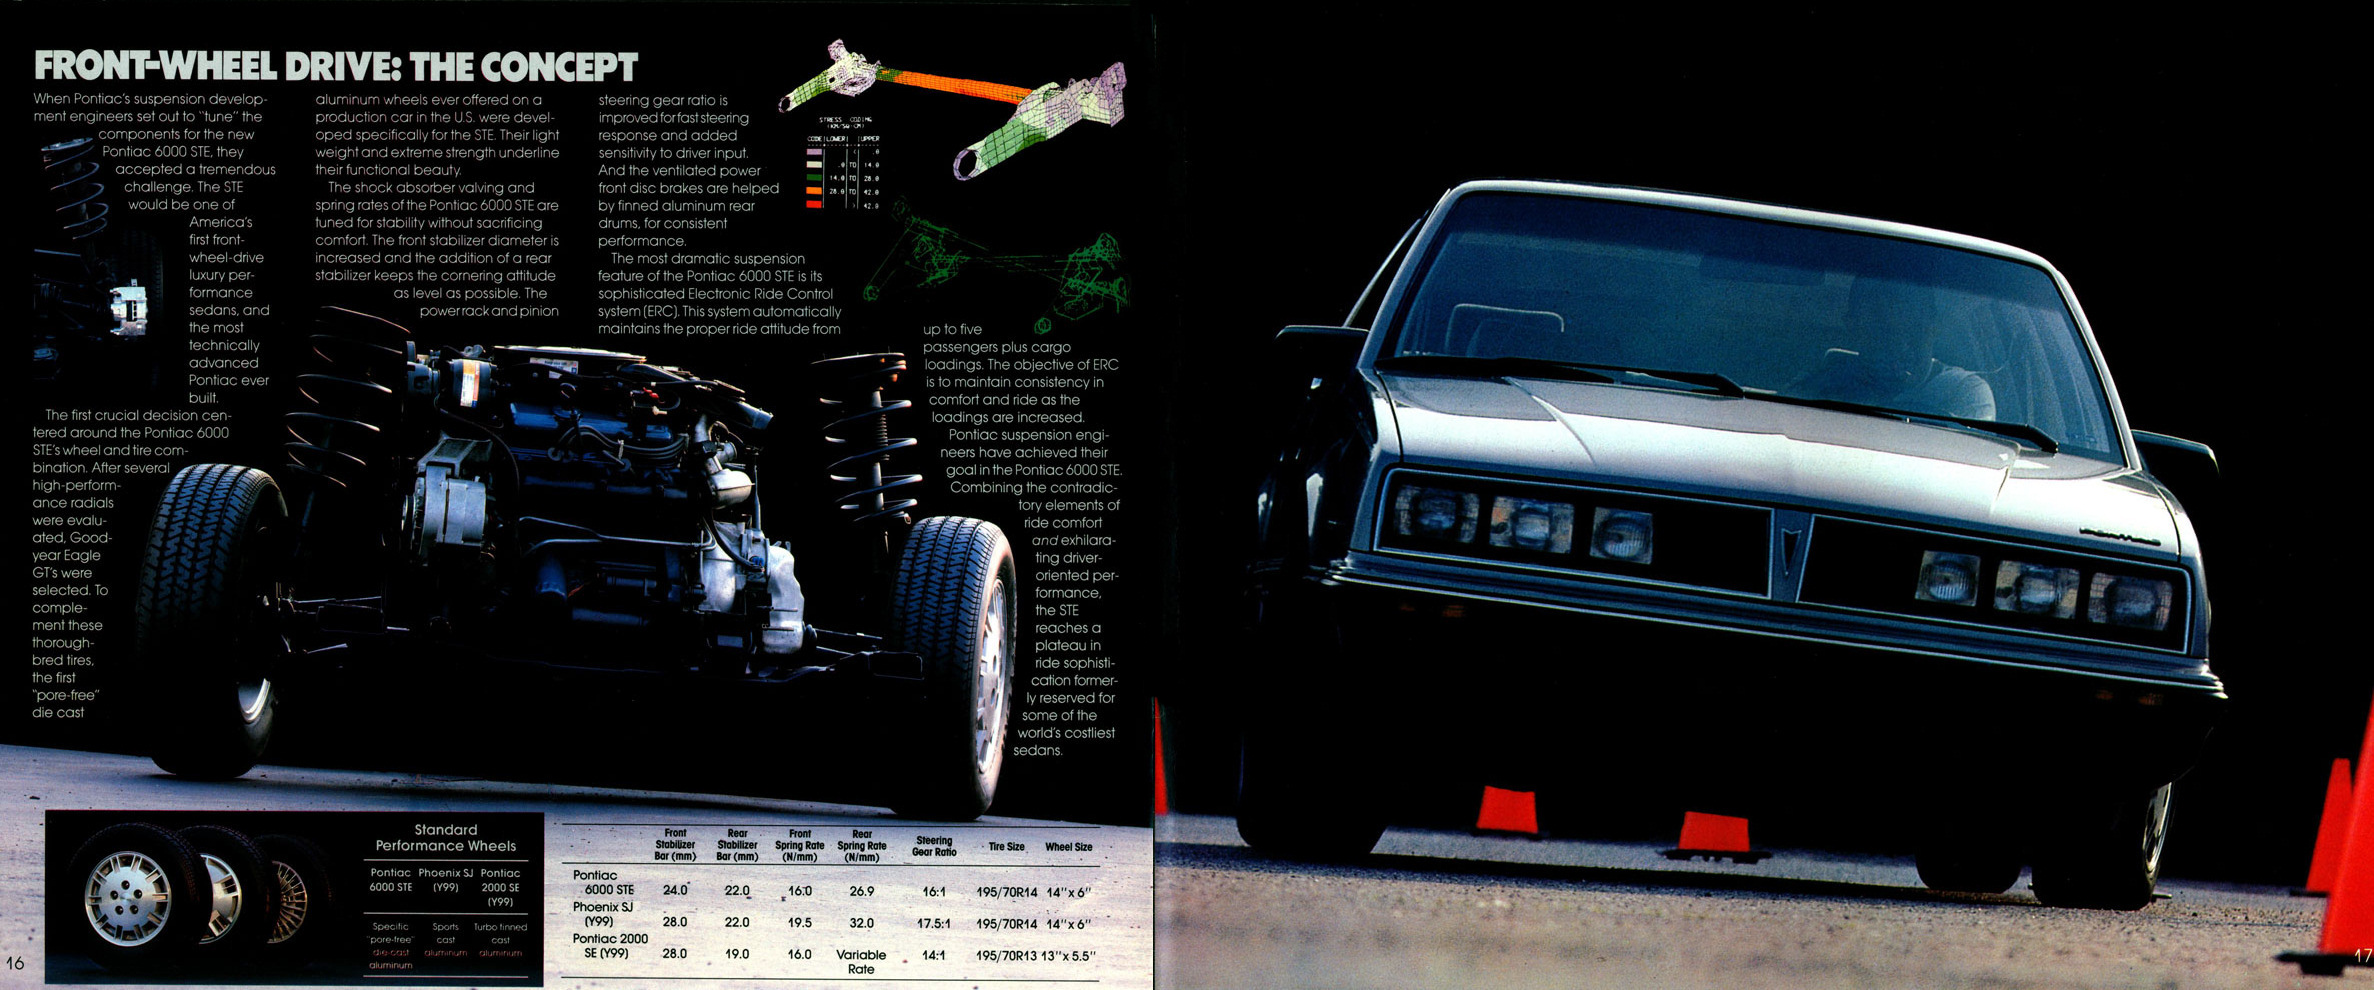 1983_Pontiac_Full_Line_Prestige-16-17